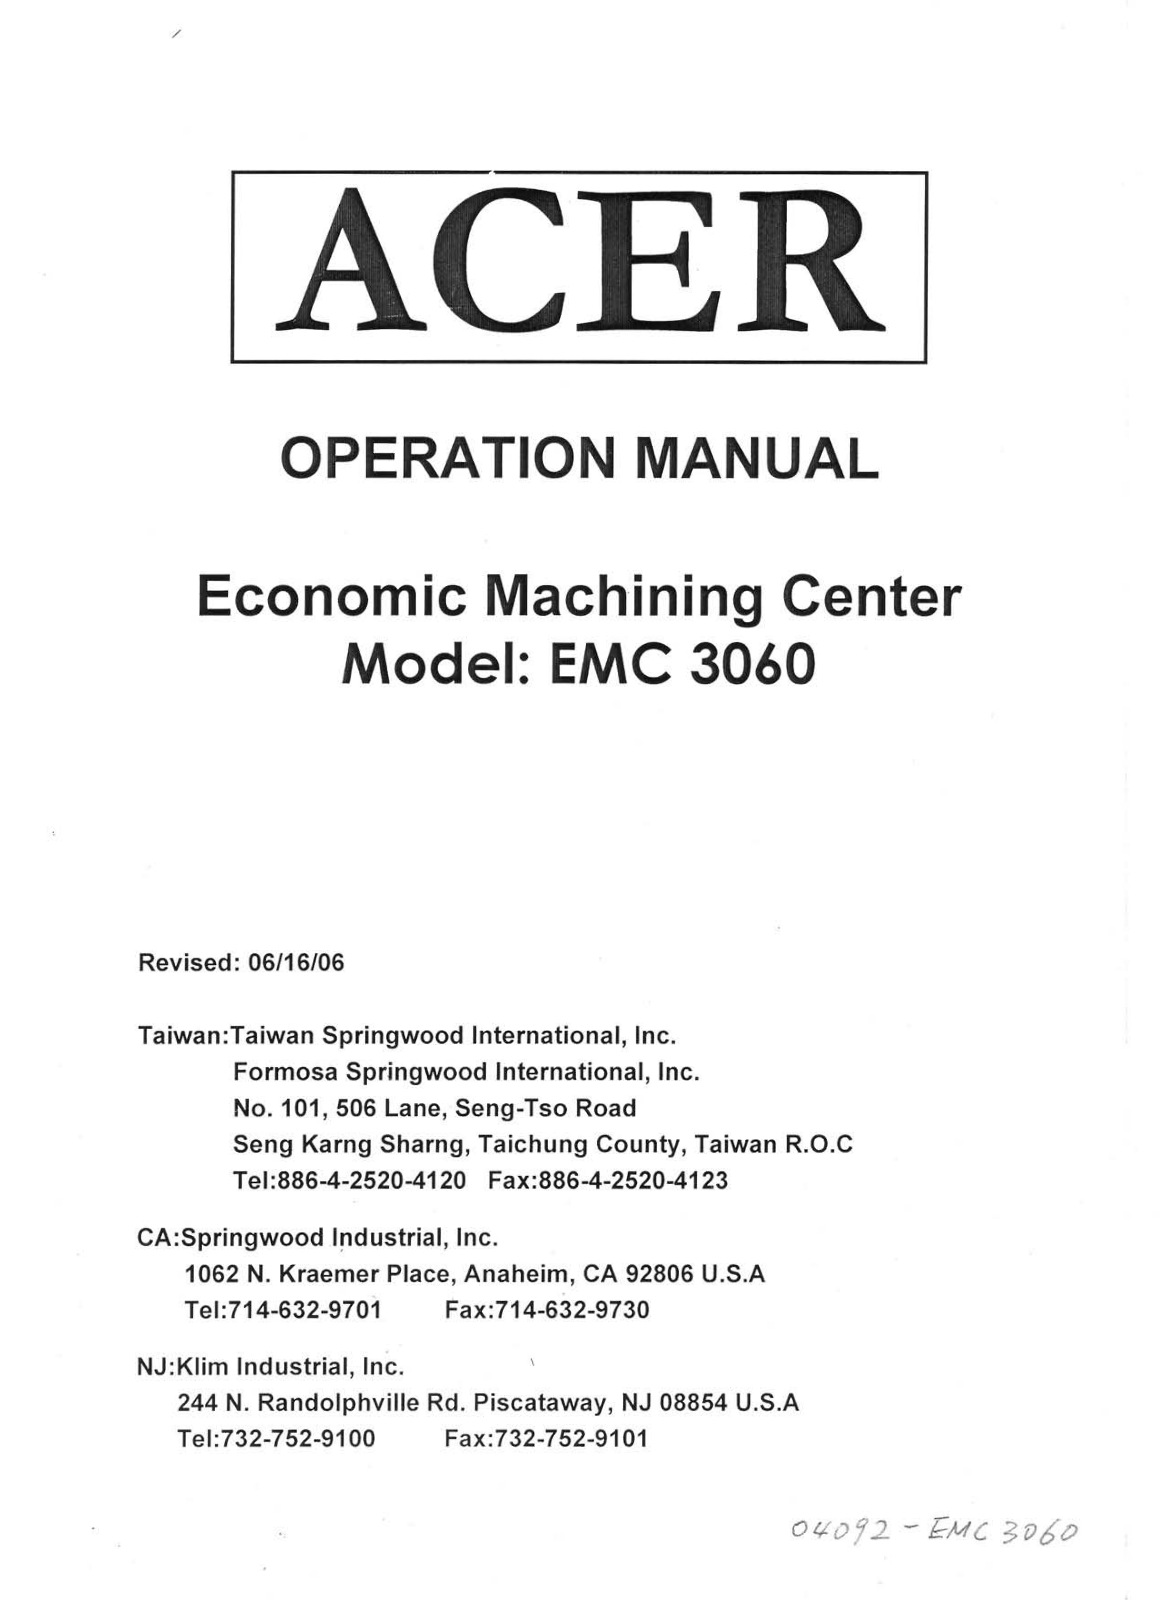 acer EMC 3060 Operation Manual